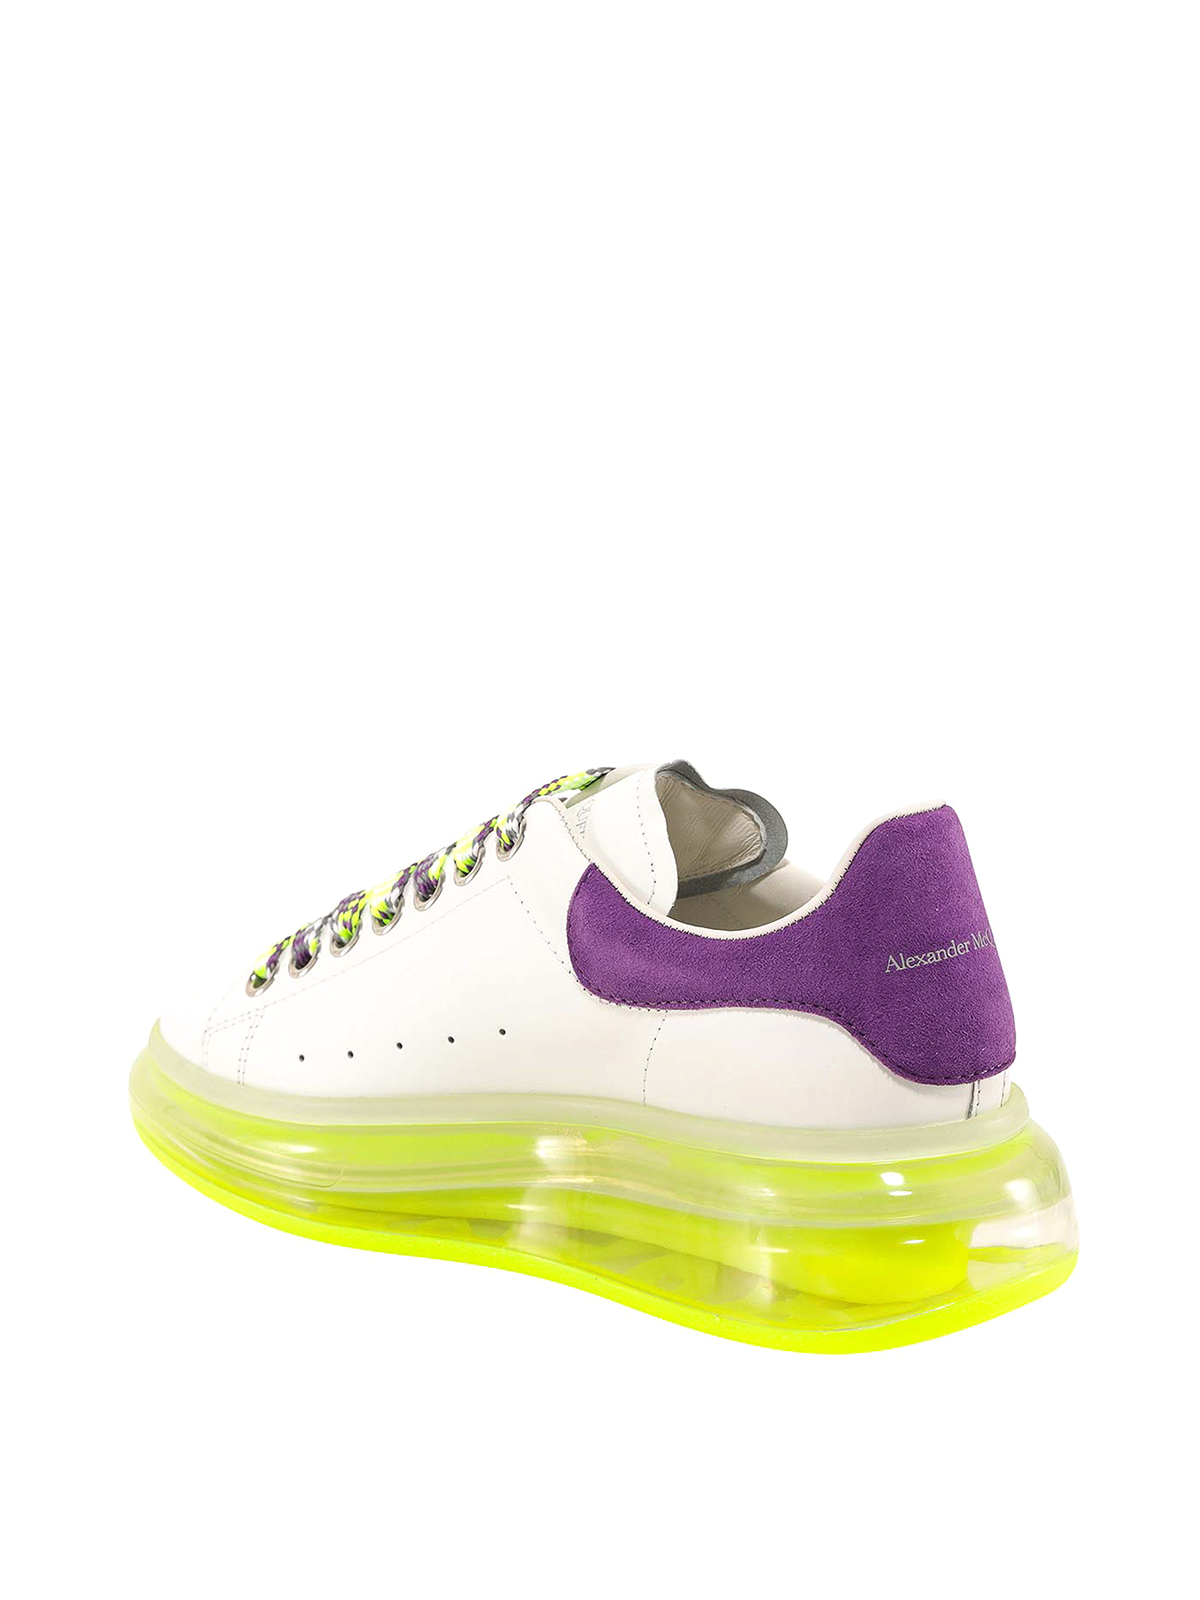 Alexander McQueen | Shoes | Neon Lace Up Snakeskin Print Sneakers | Poshmark